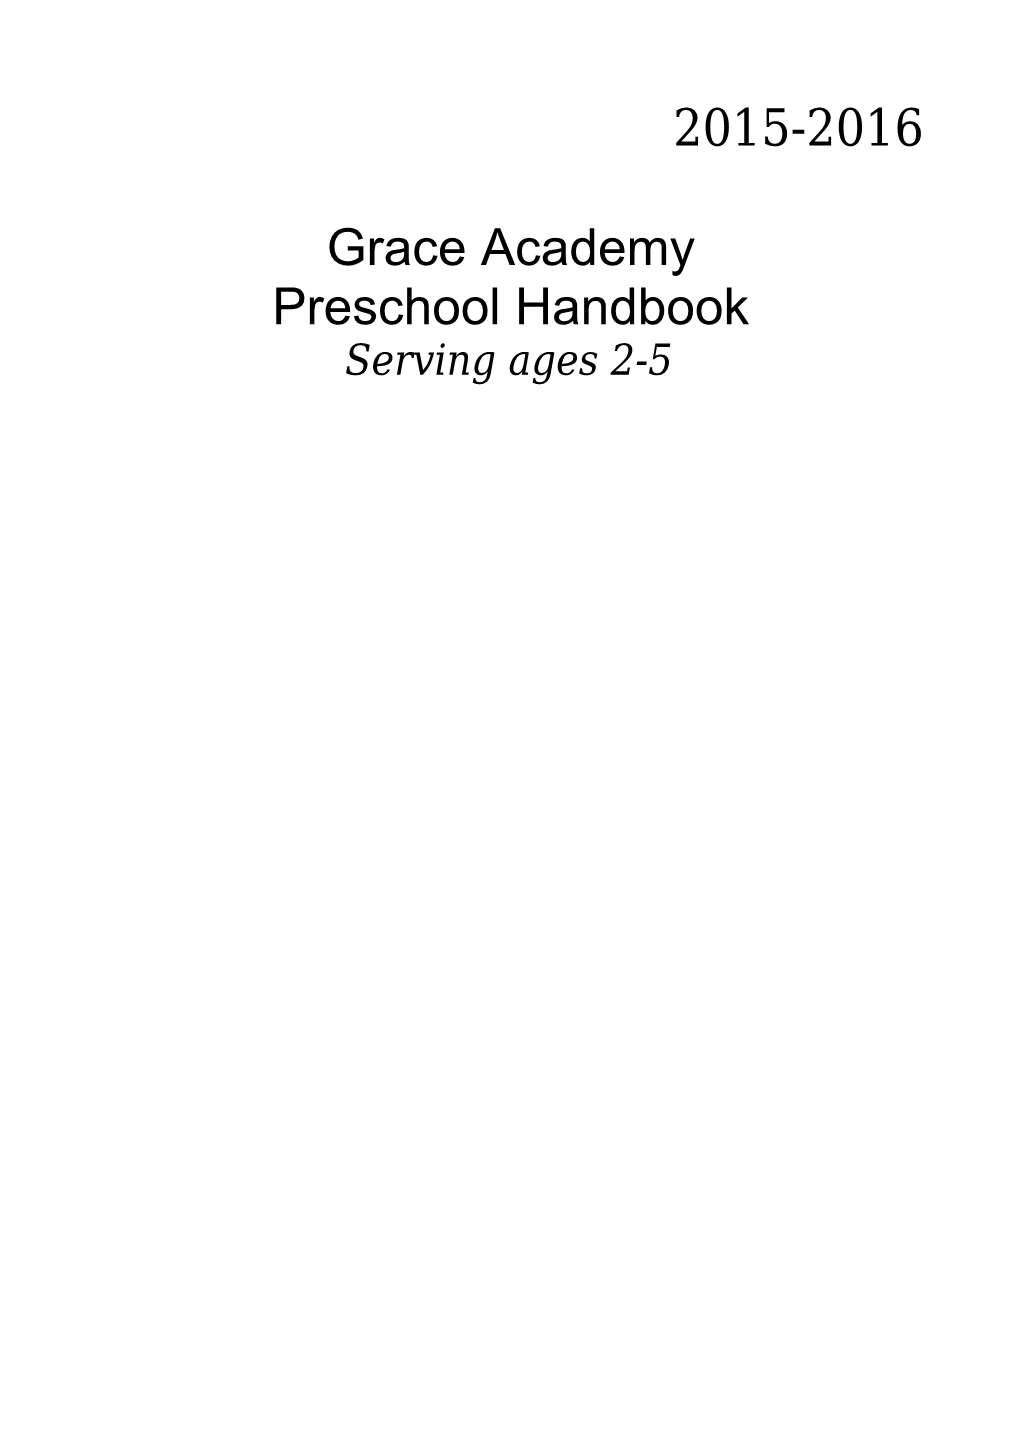 Grace Academy Preschool Parent Handbook 2015-2016